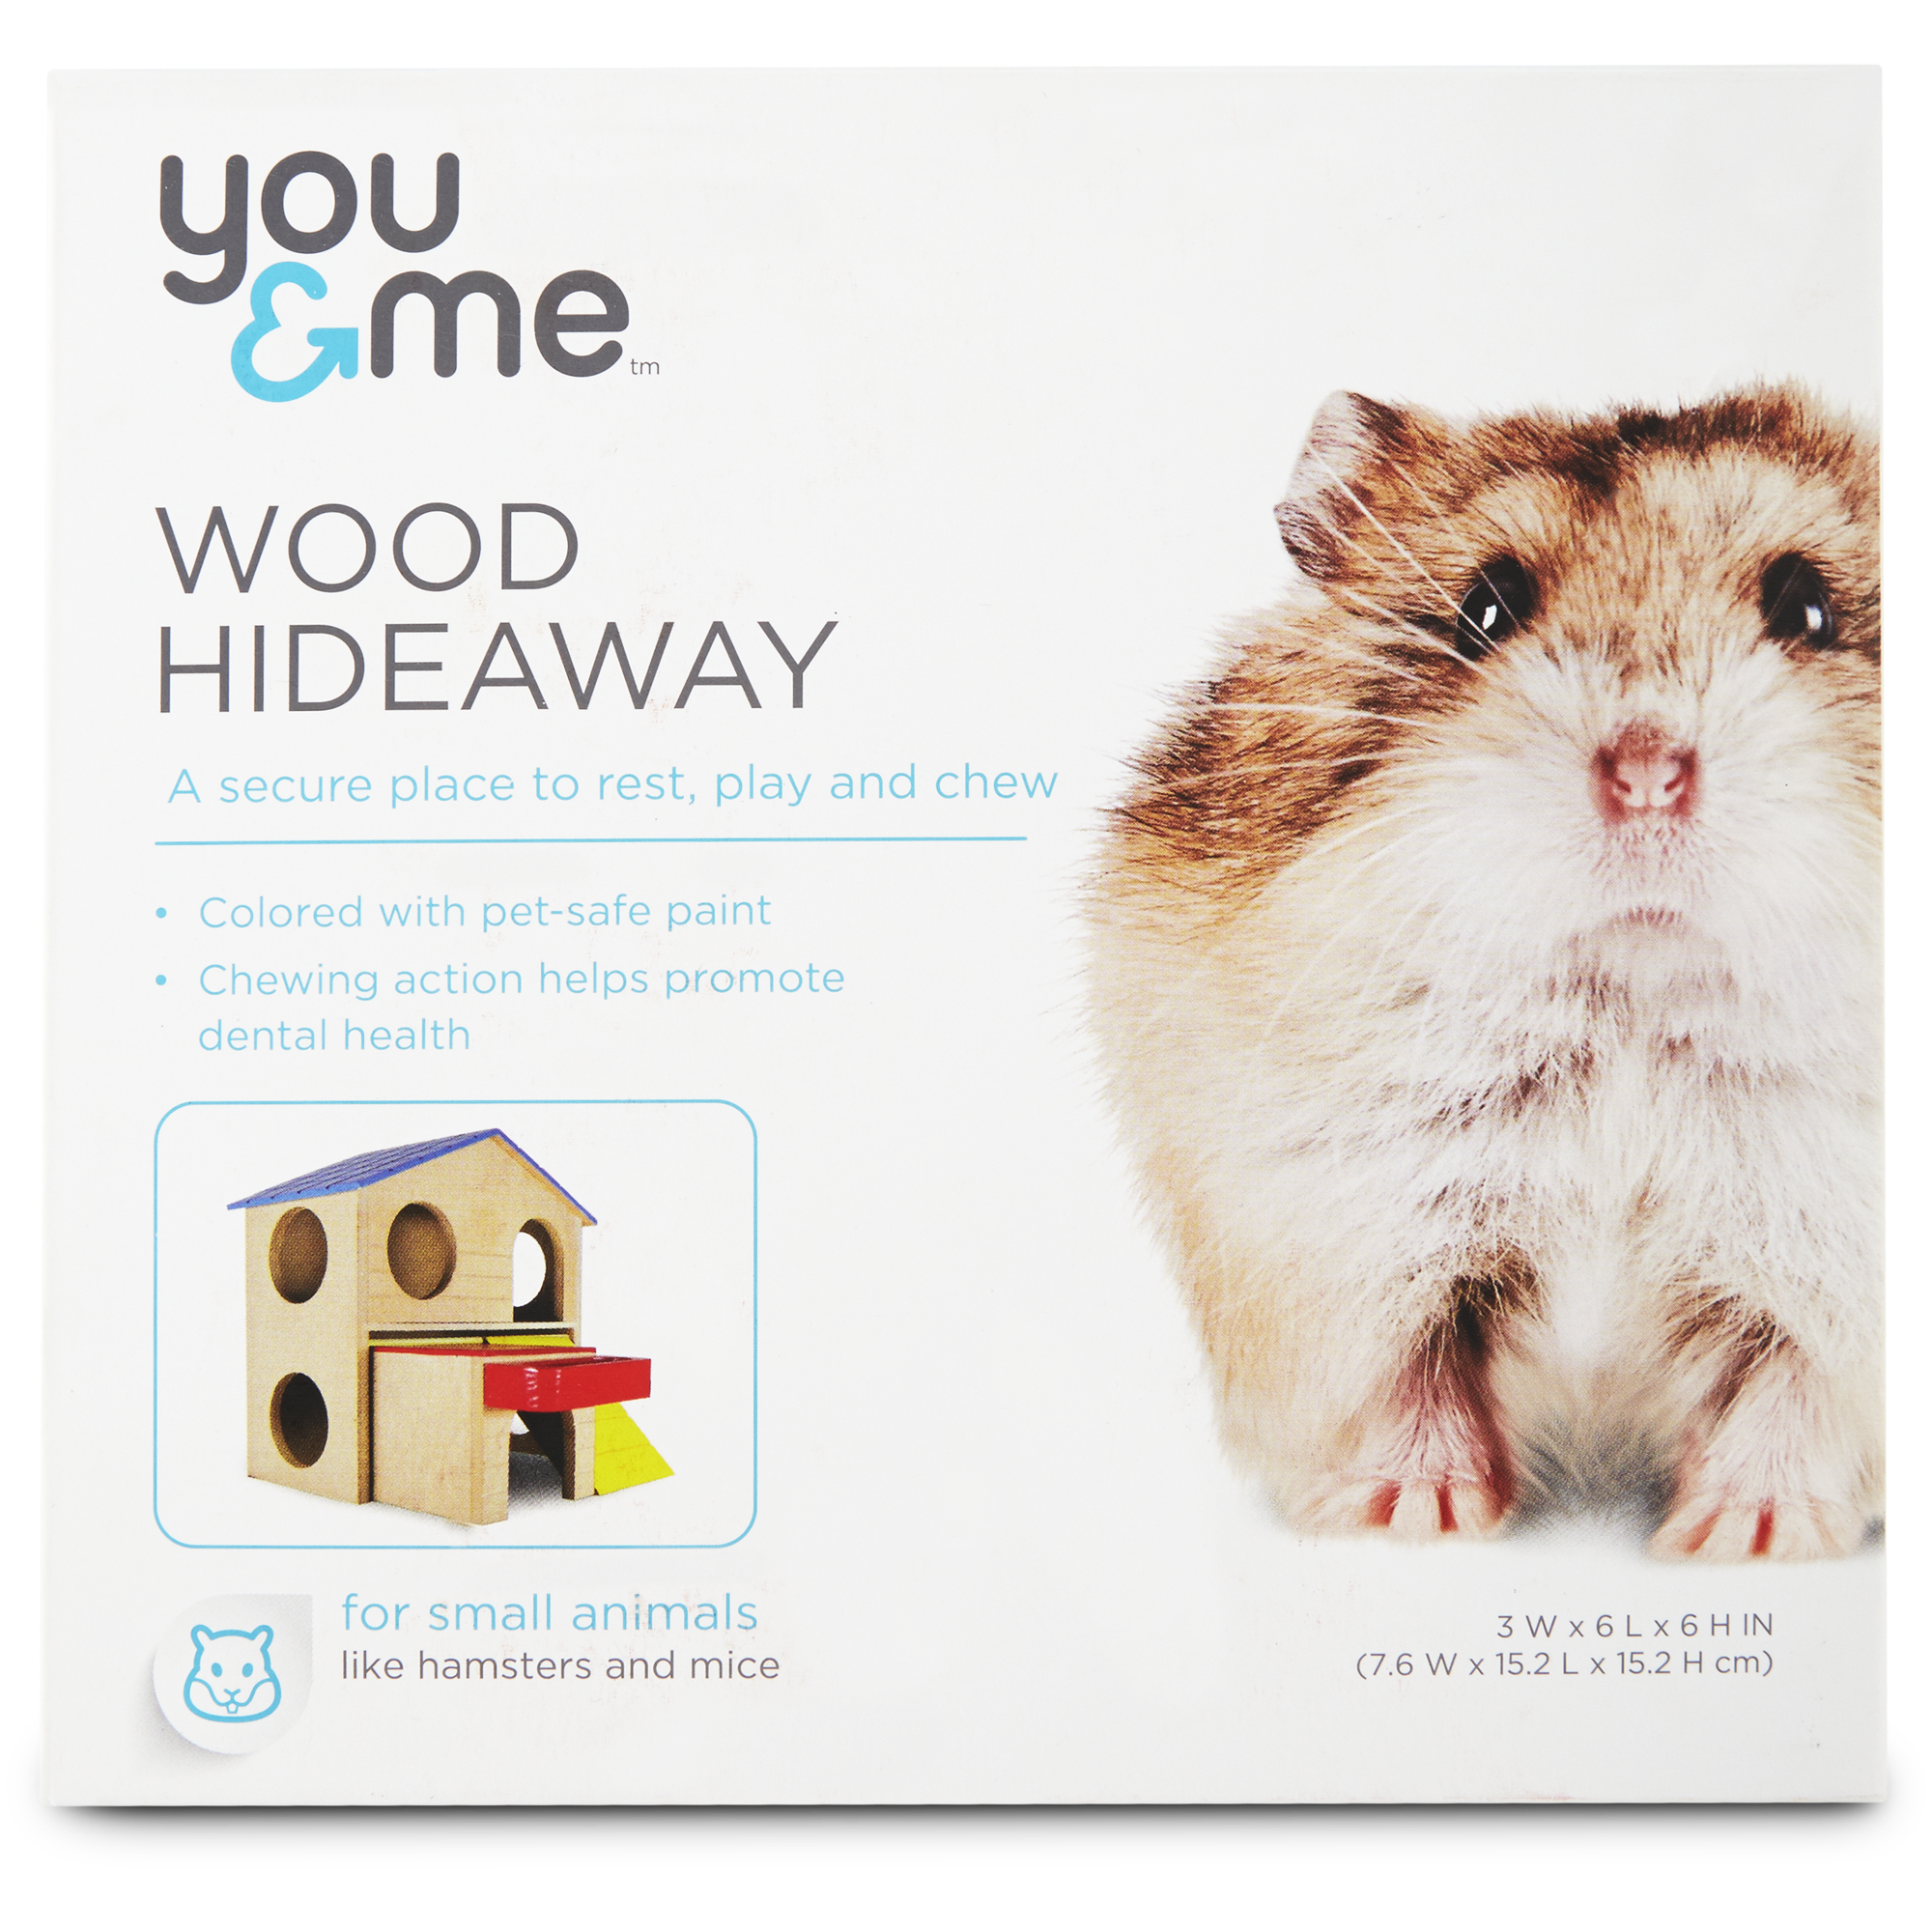 Hamster Care Sheet: Food, Habitat & Health